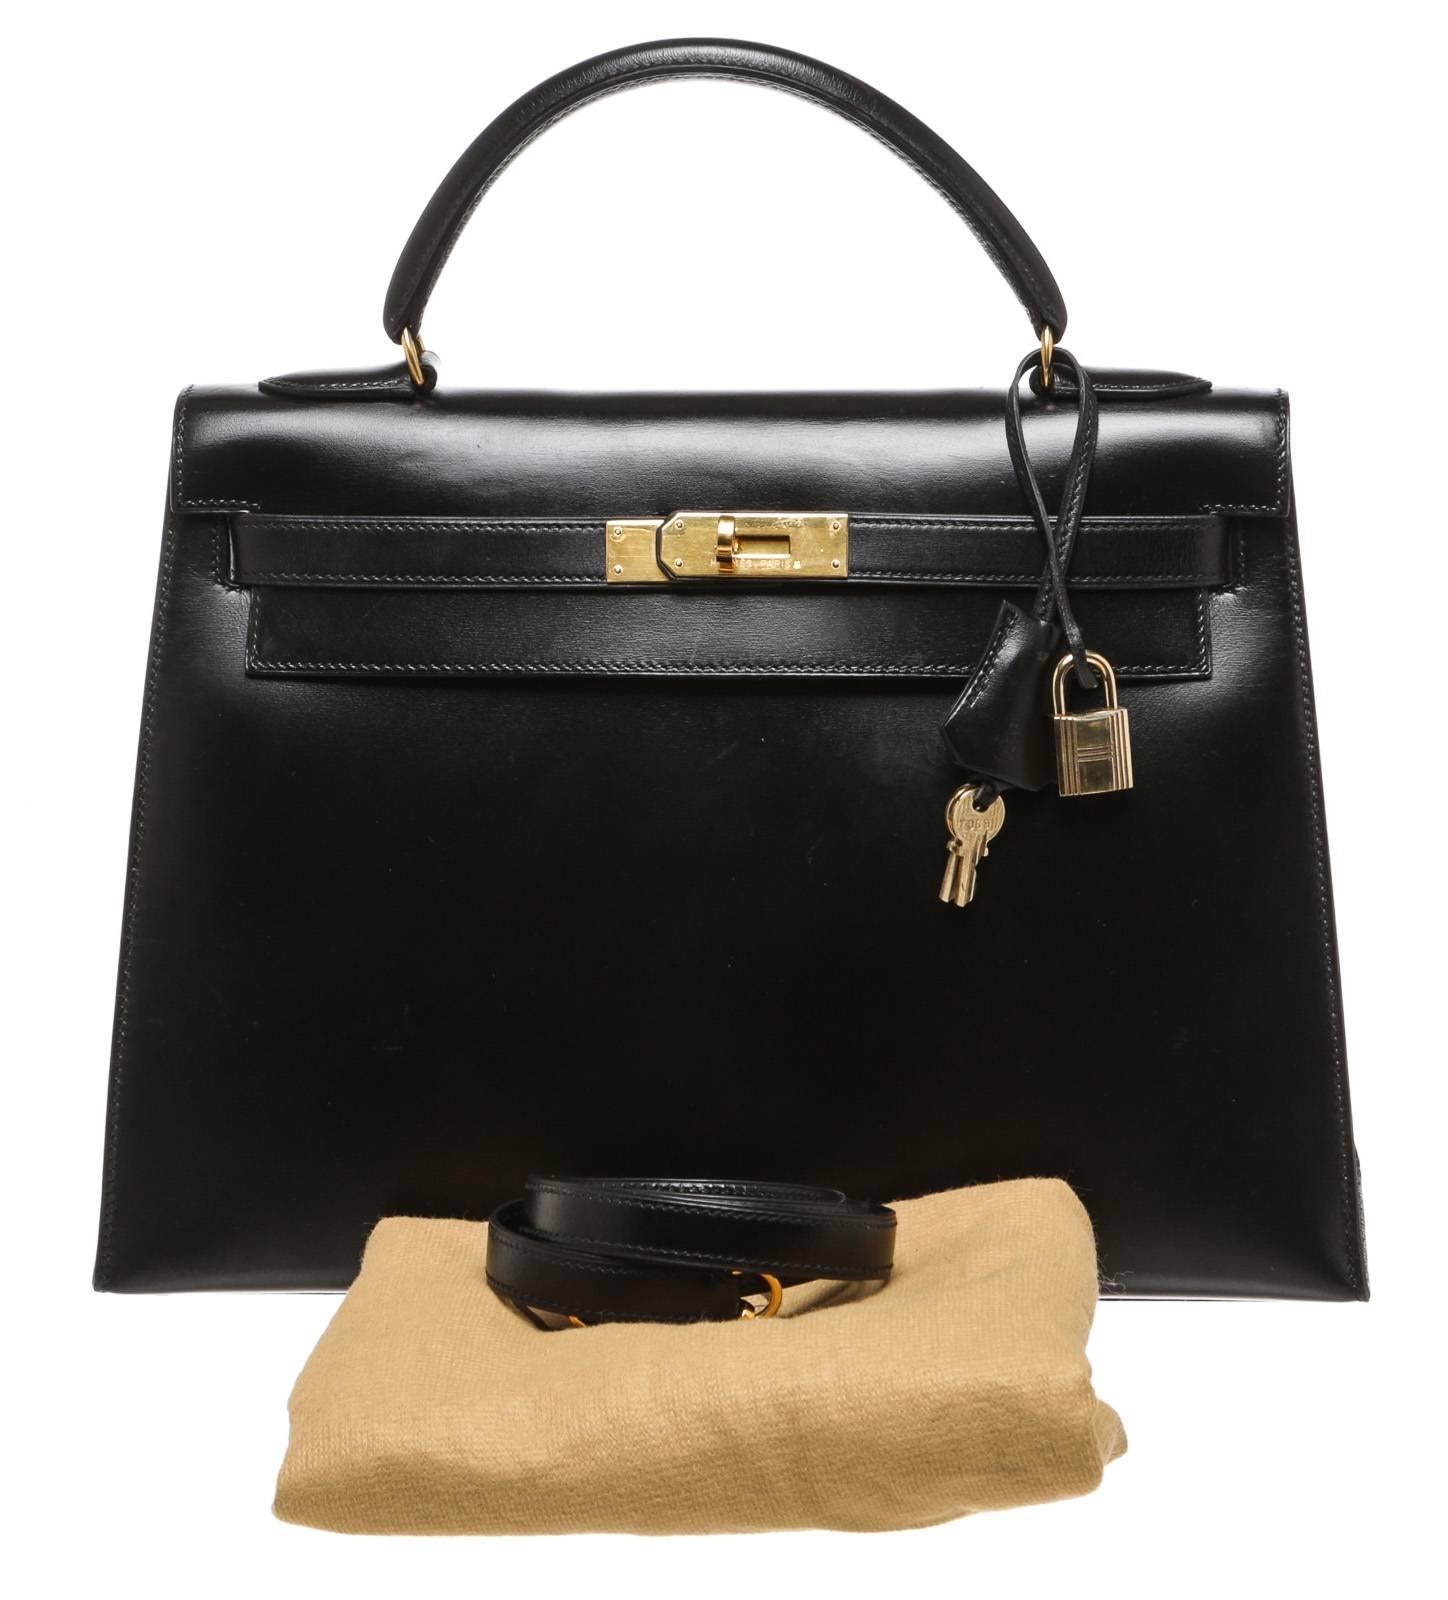 Hermes Black Leather 32cm Kelly Handbag GHW For Sale 5